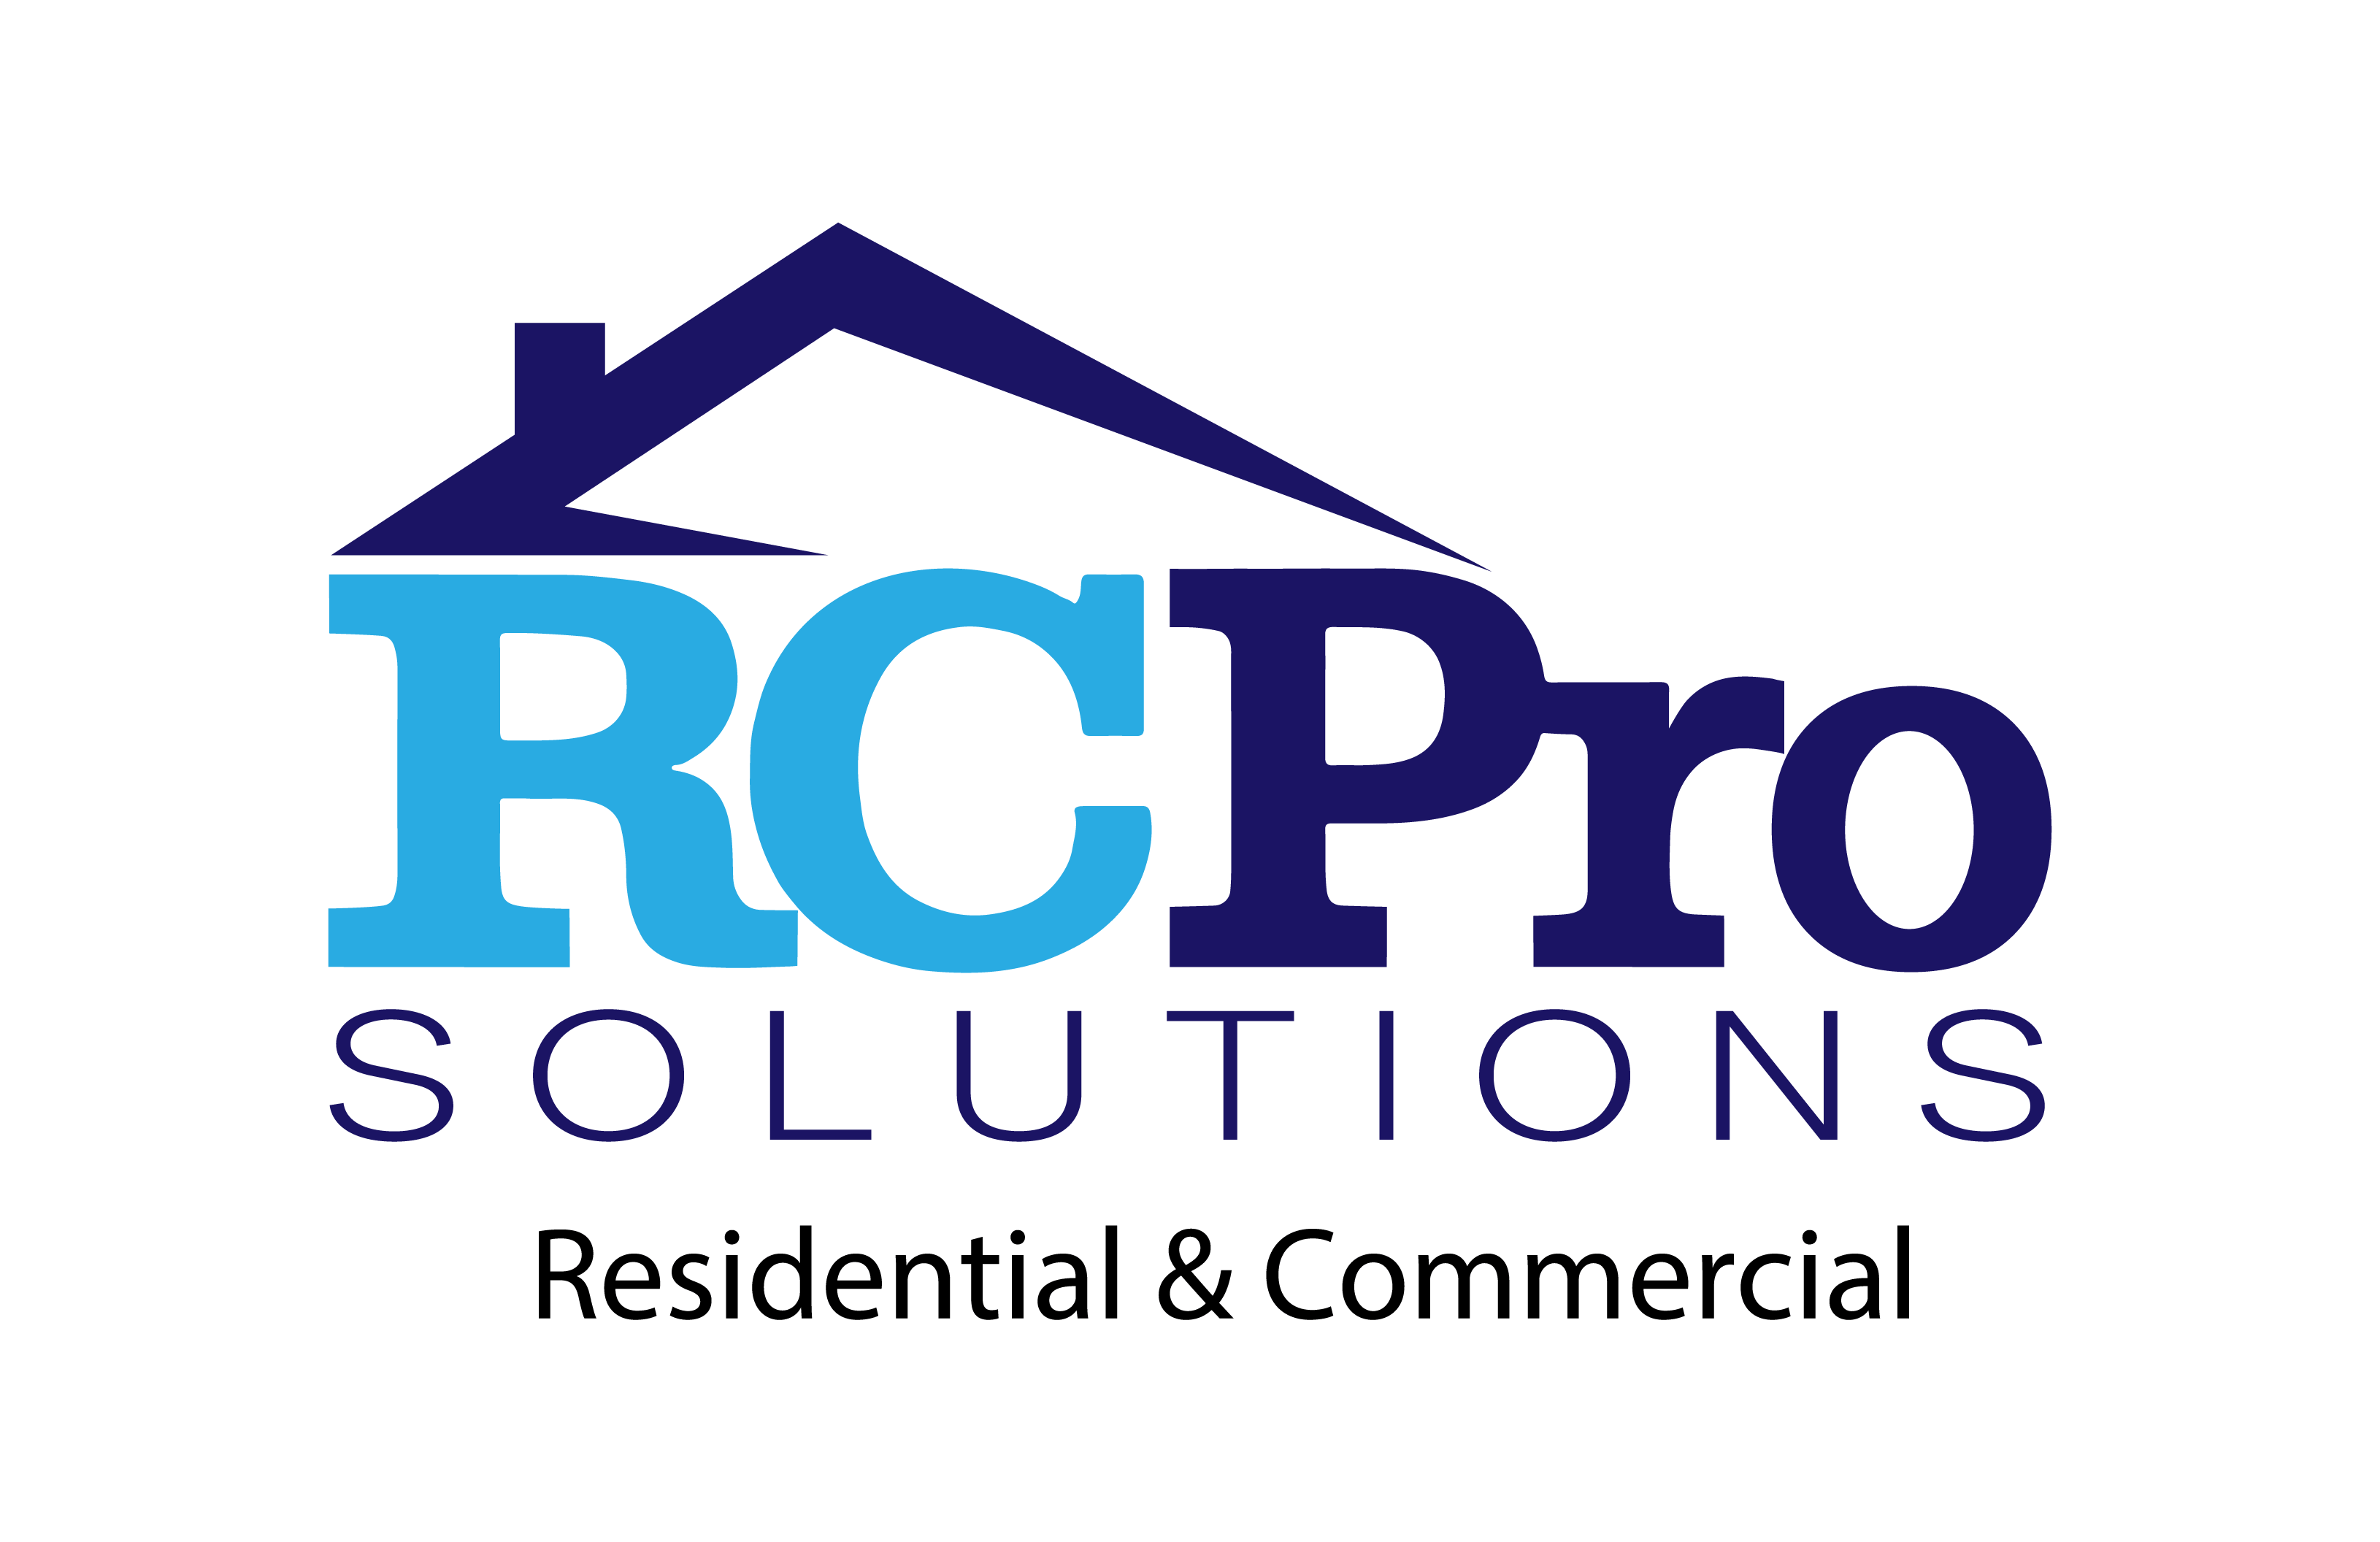 RC Pro Solutions logo